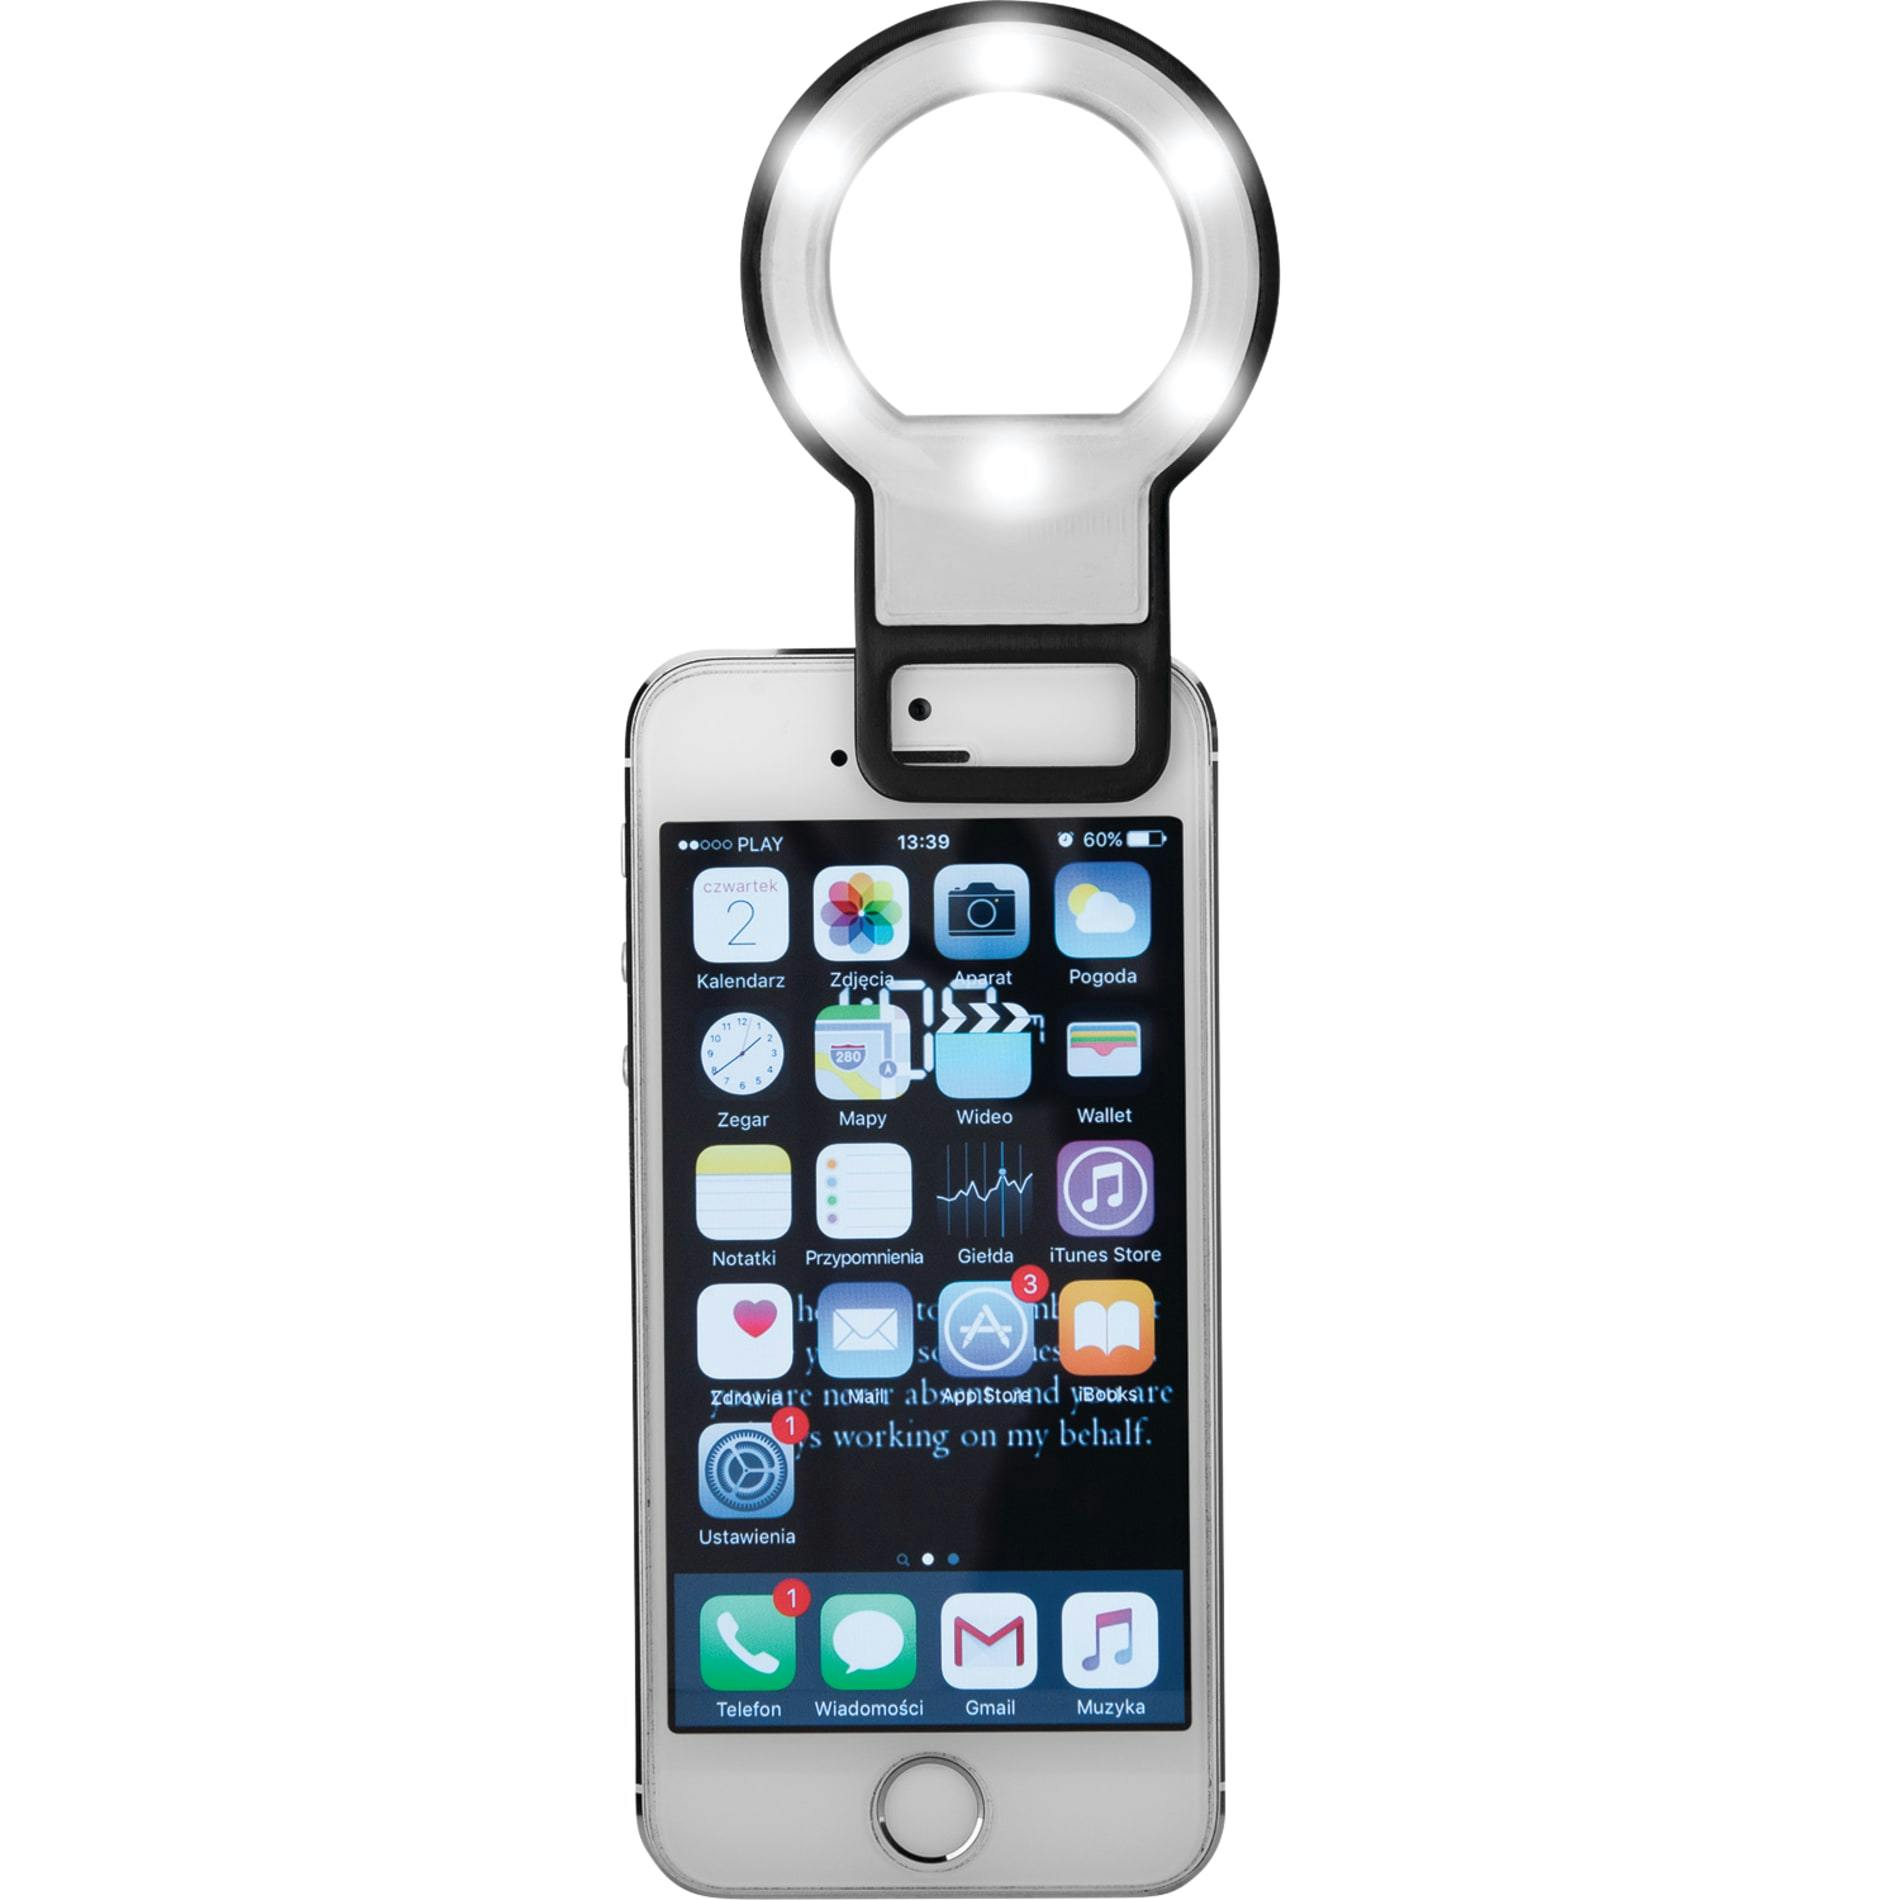 Mirror LED Selfie Flashlight - additional Image 1